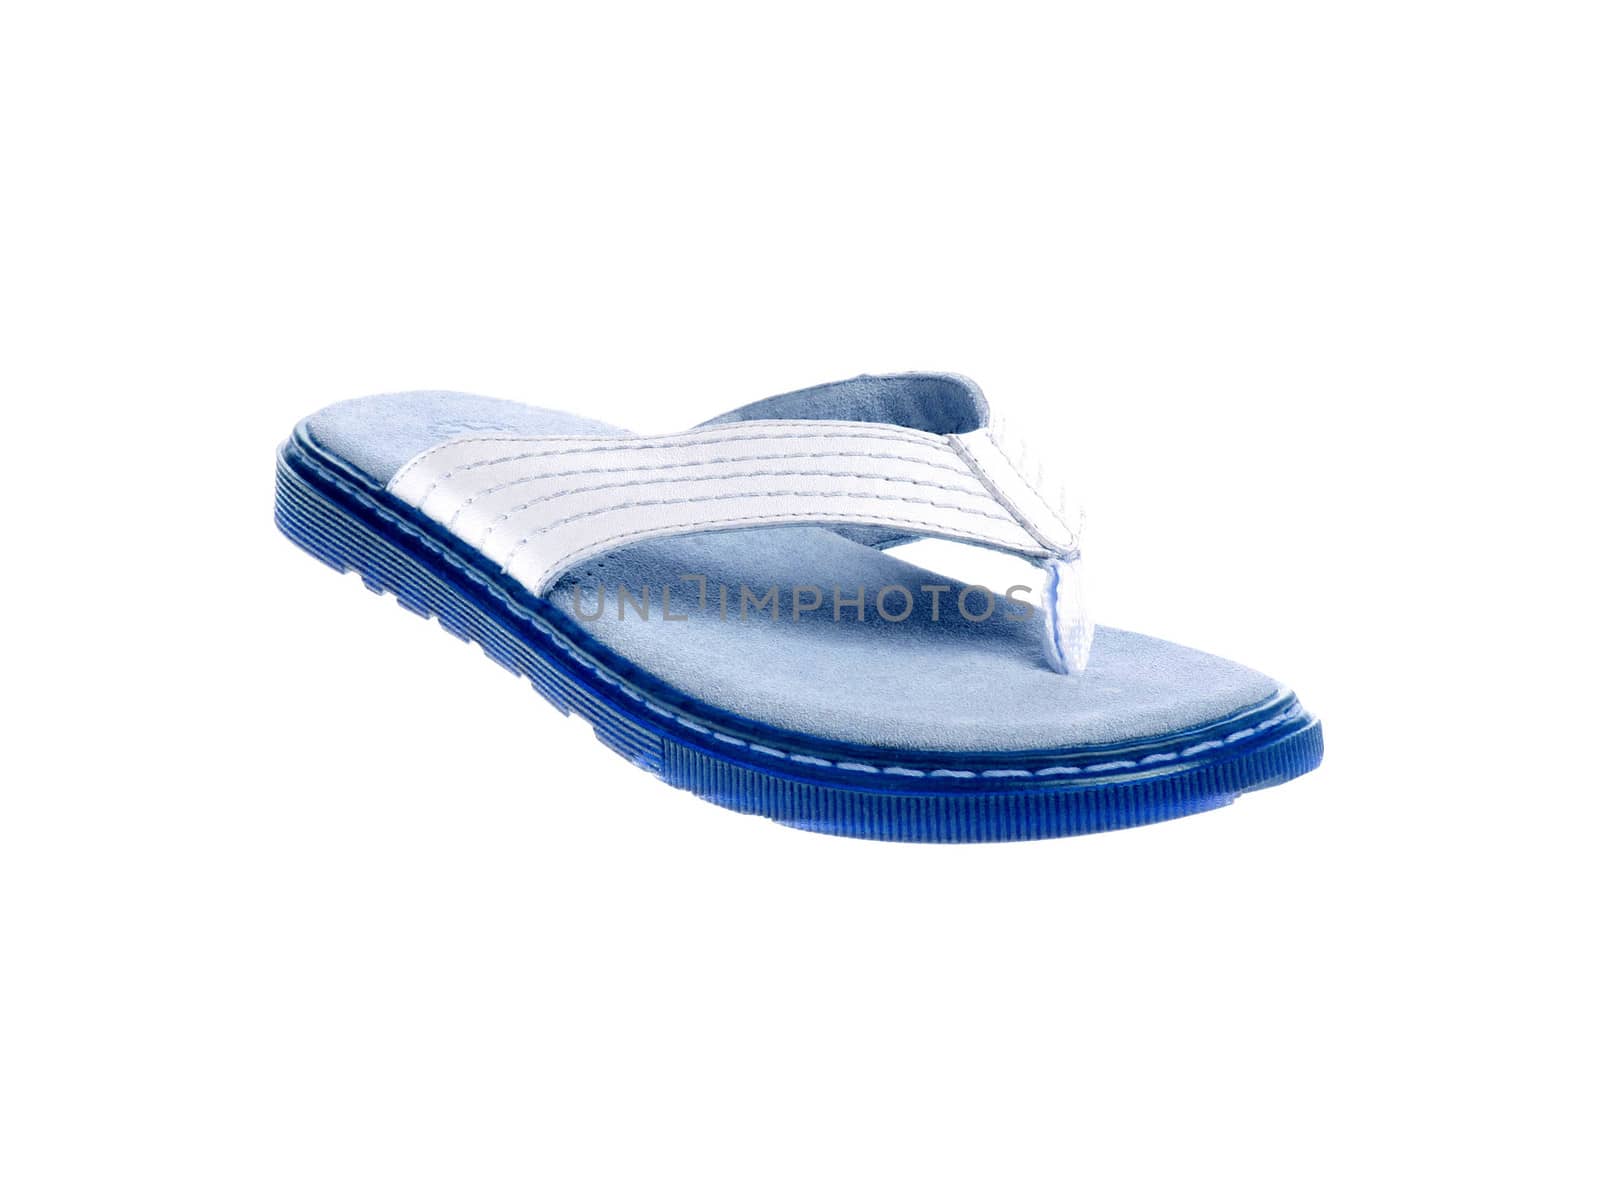 Blue sandal by shutswis